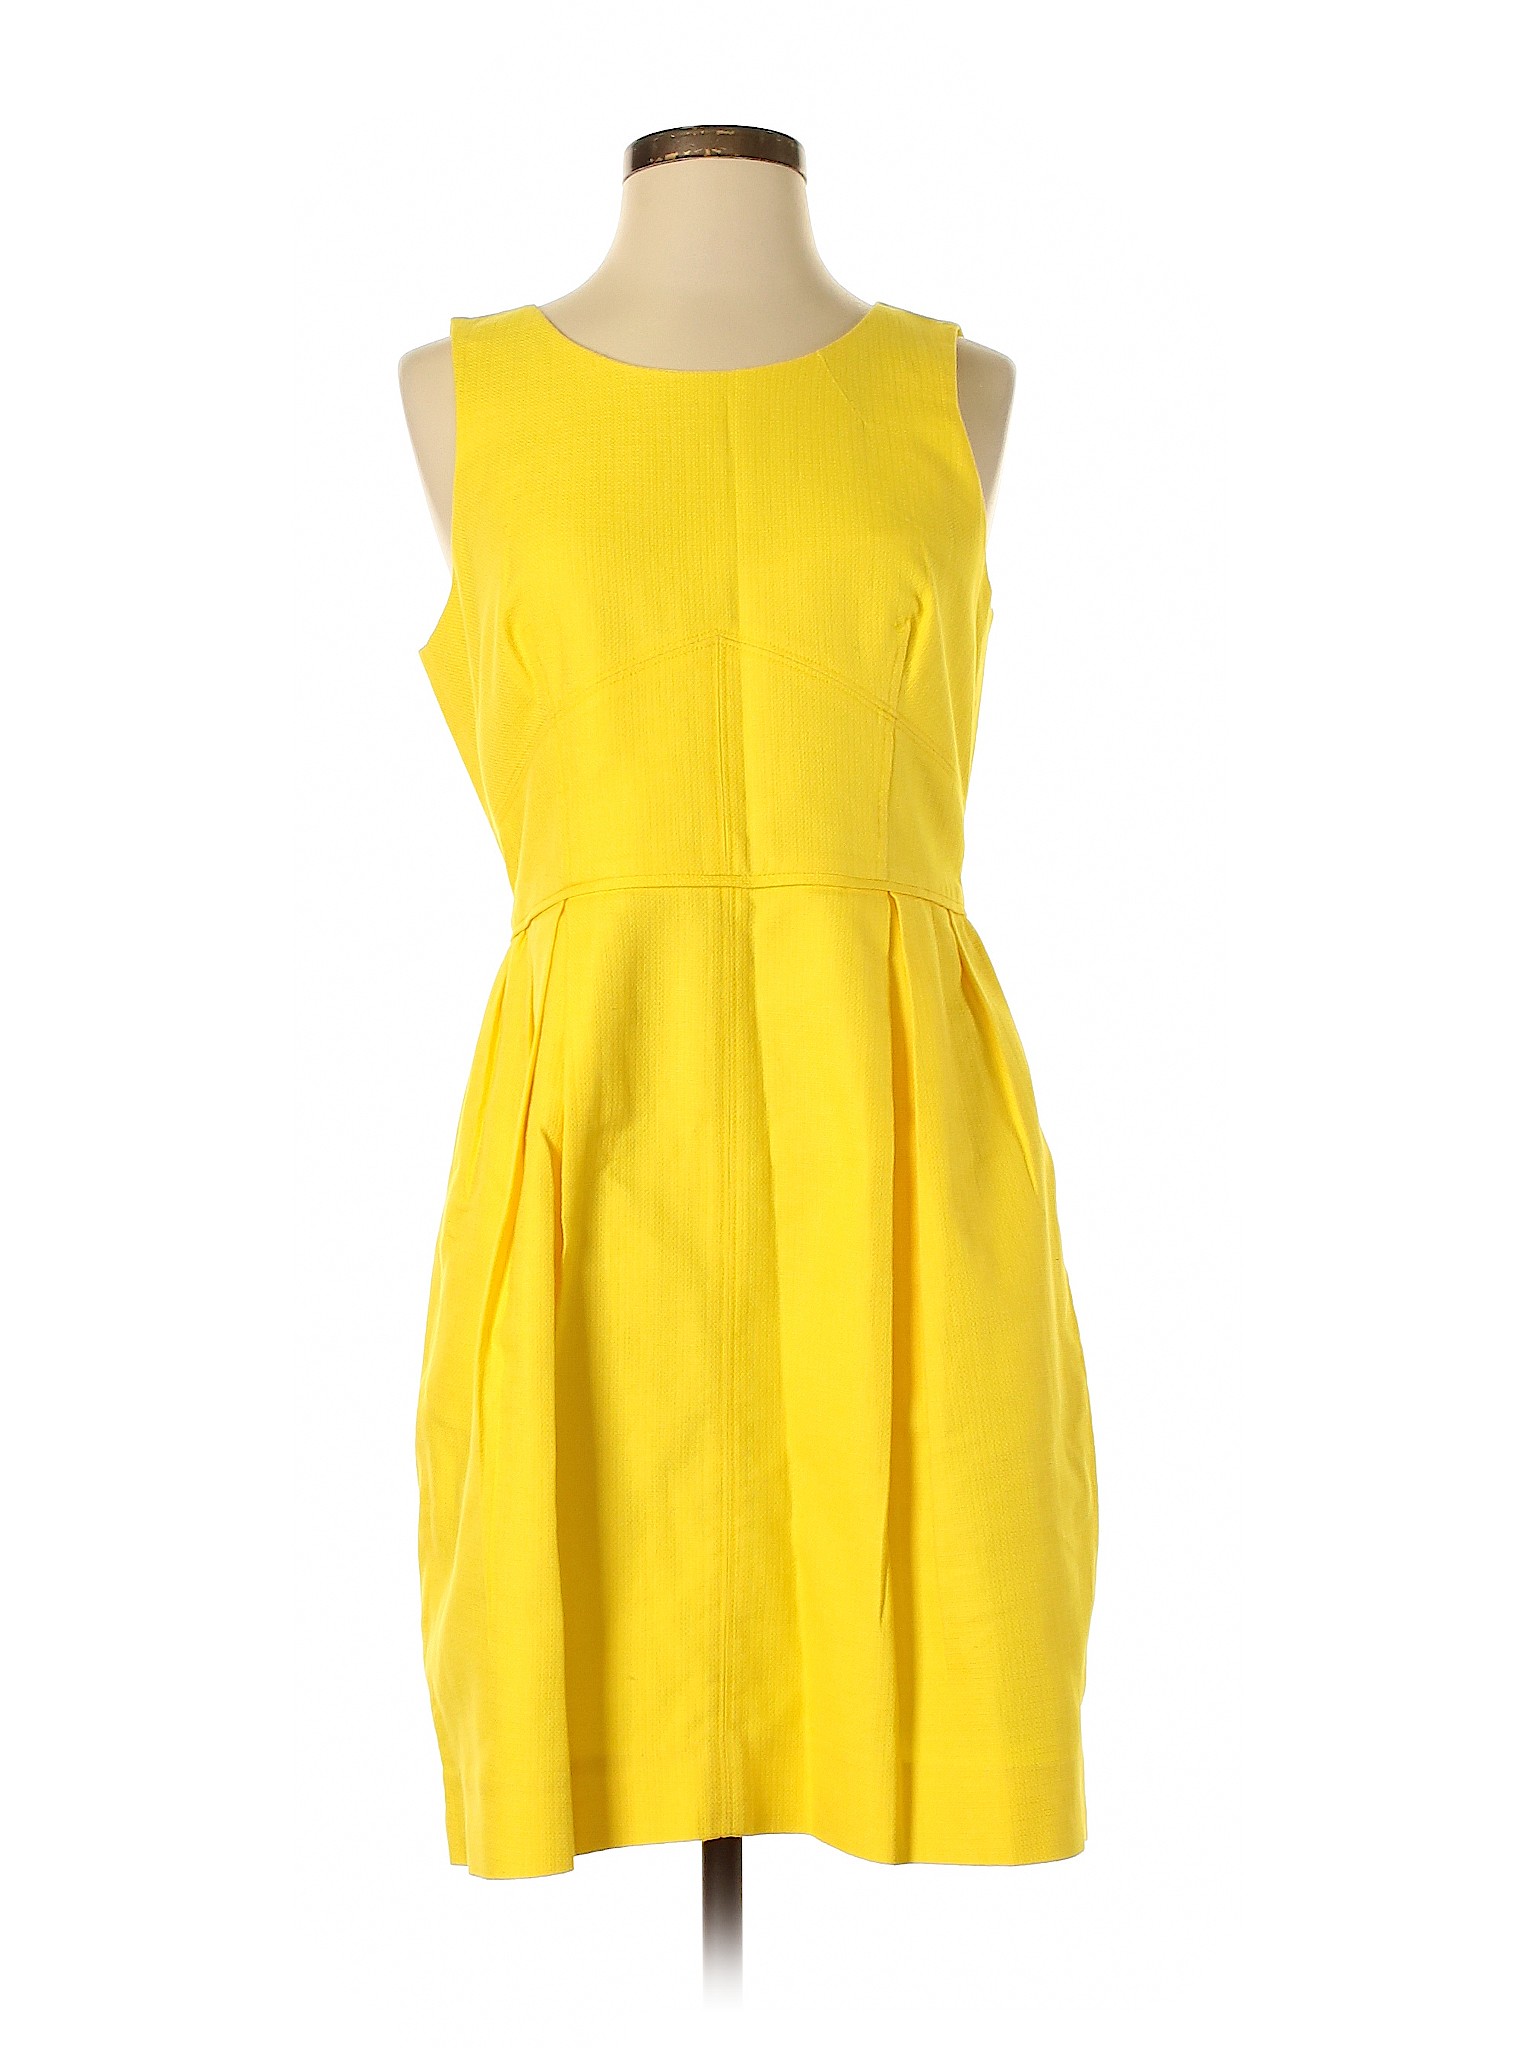 J. Crew Factory Store Women Yellow Casual Dress 4 | eBay